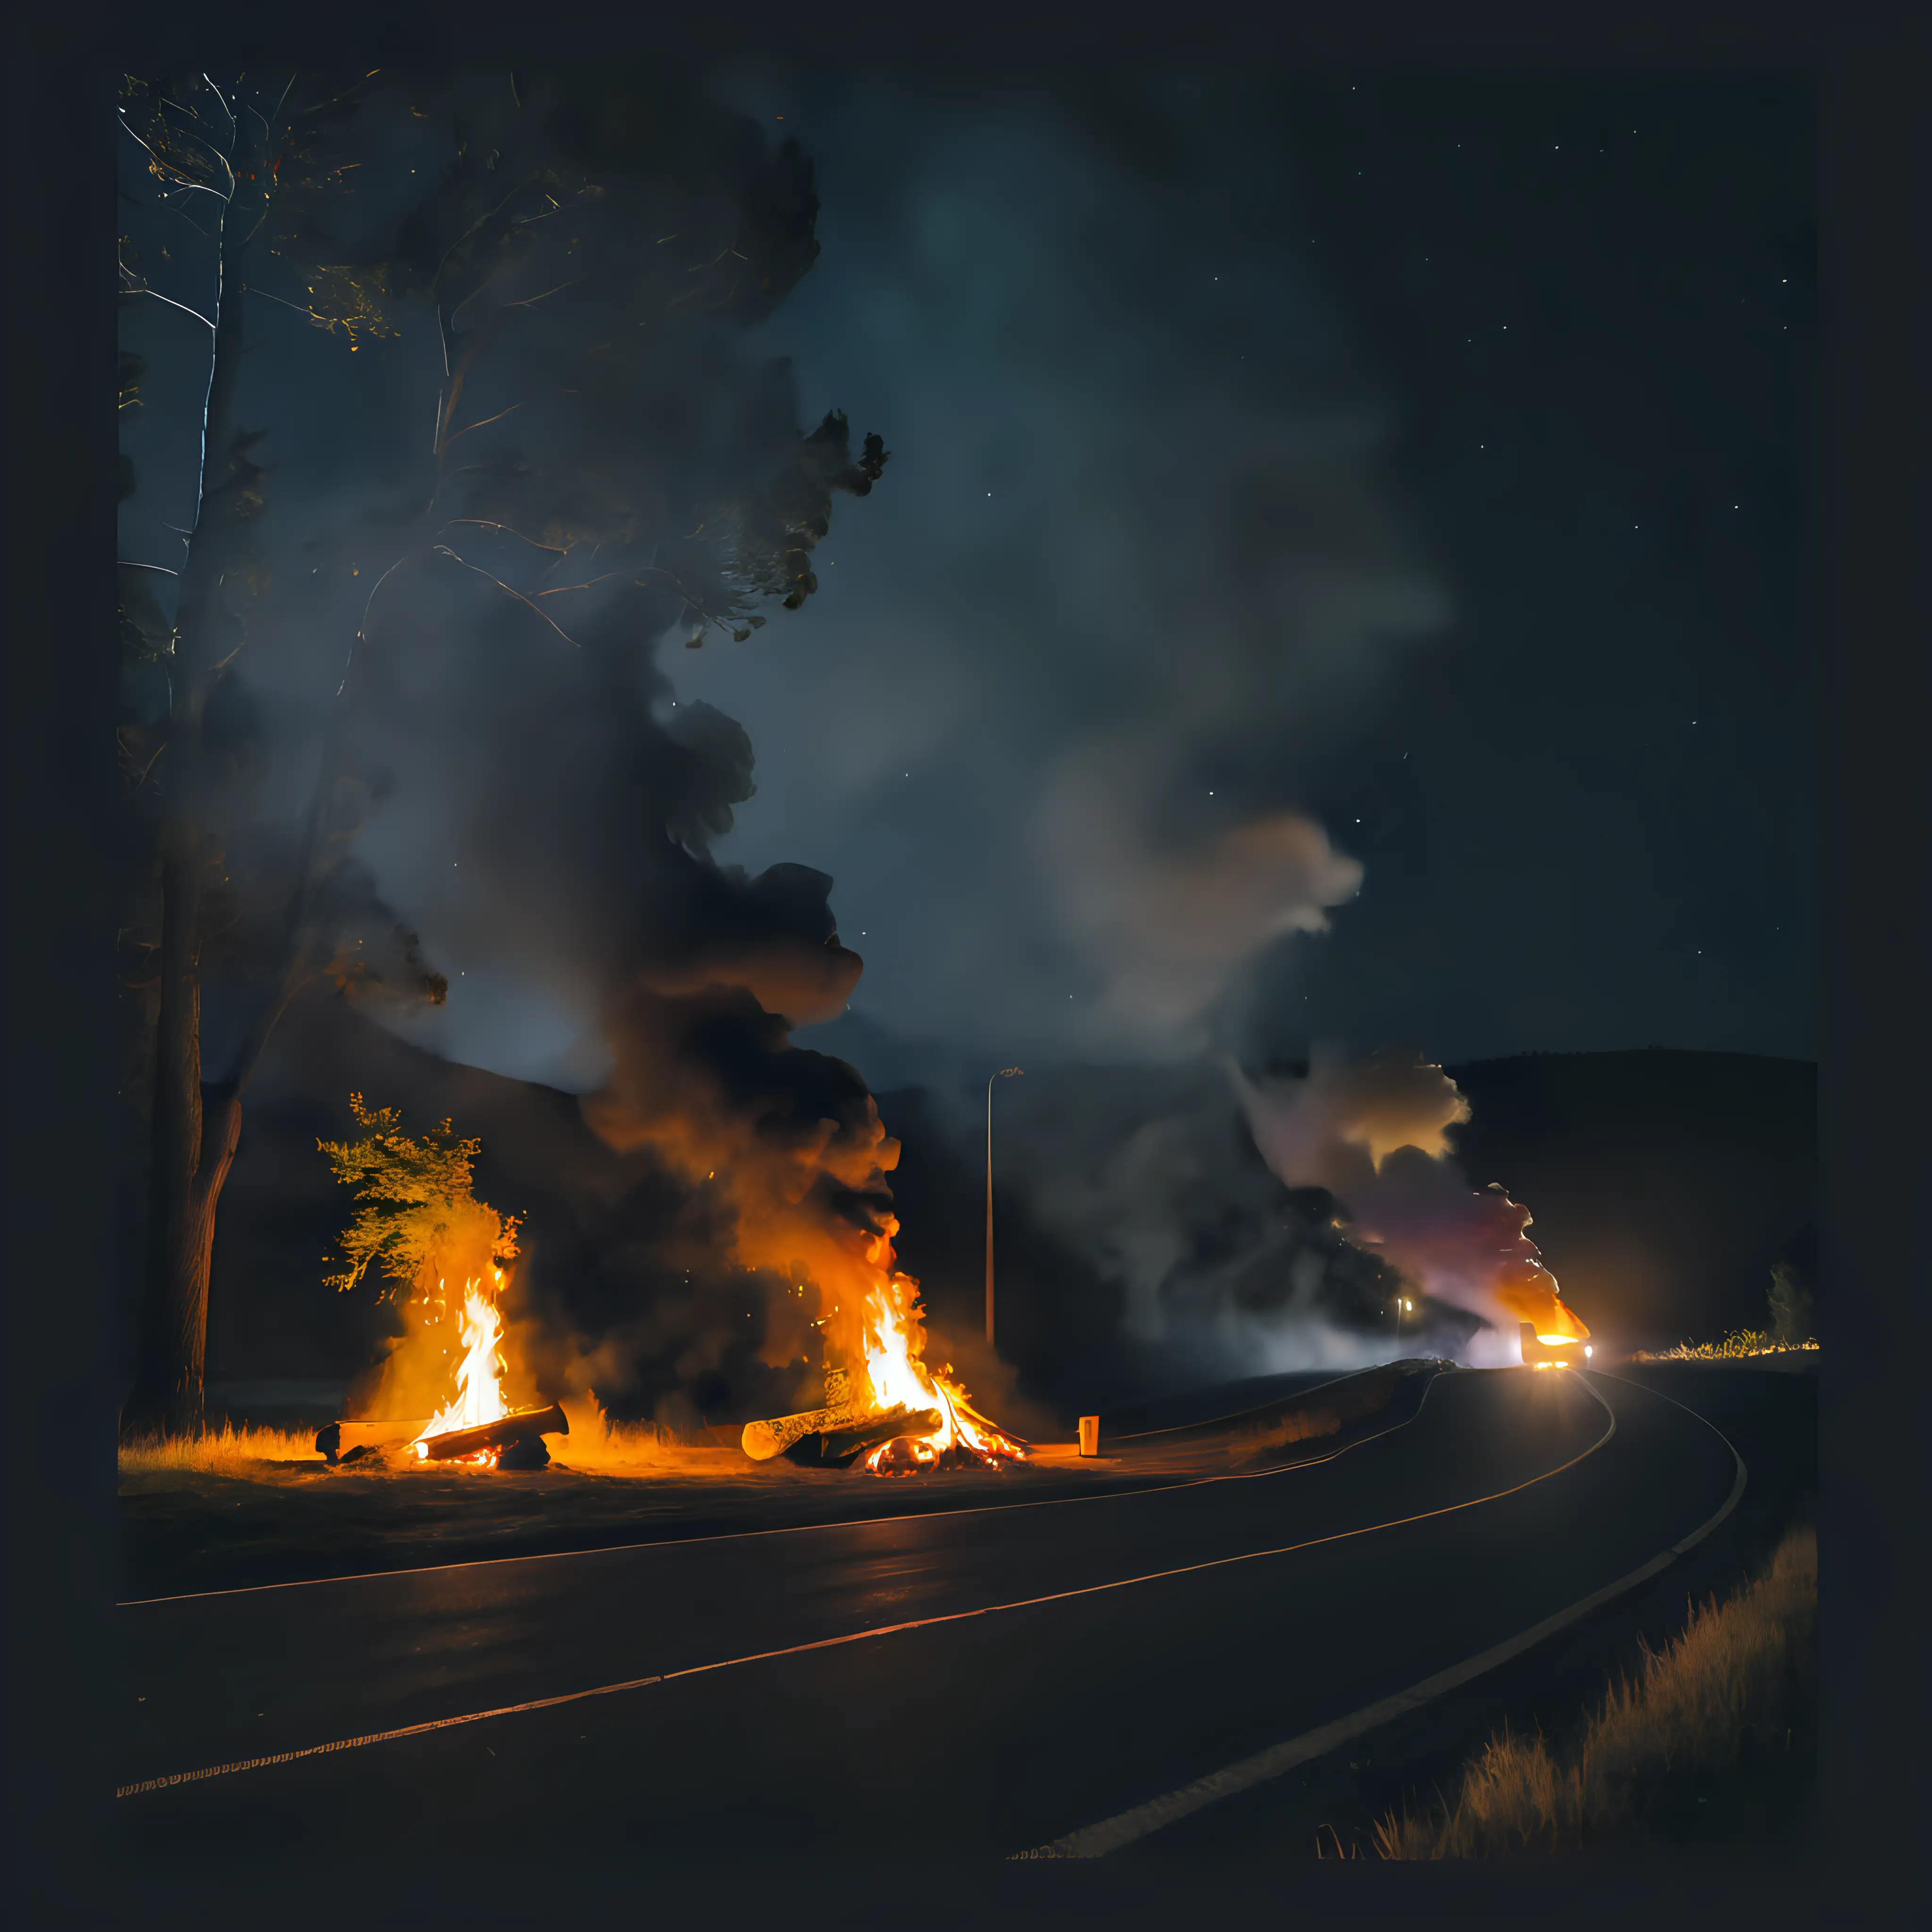 Nighttime Roadside Bonfire with Number 7 Smoke